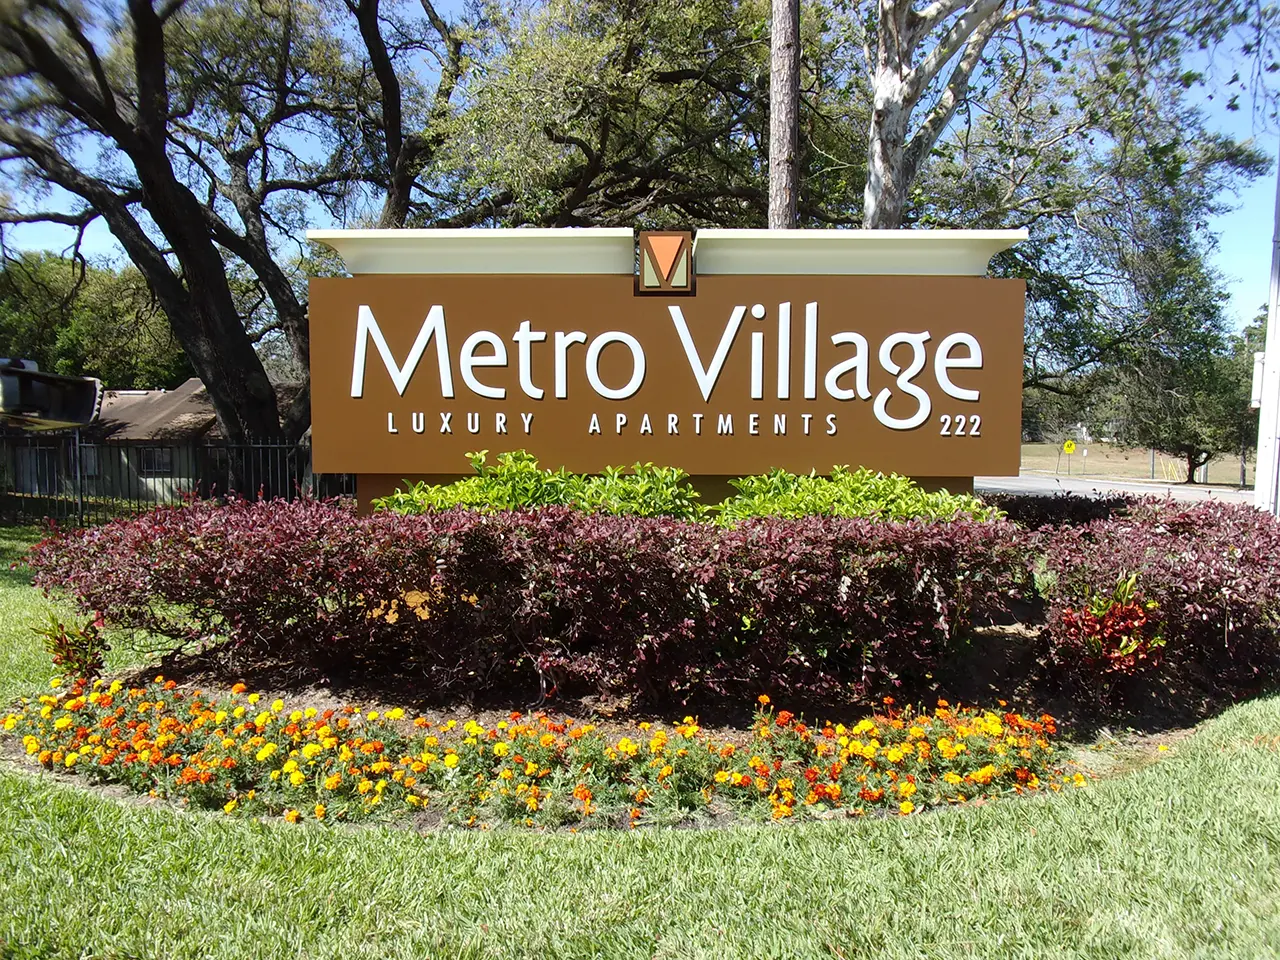 Metro Village